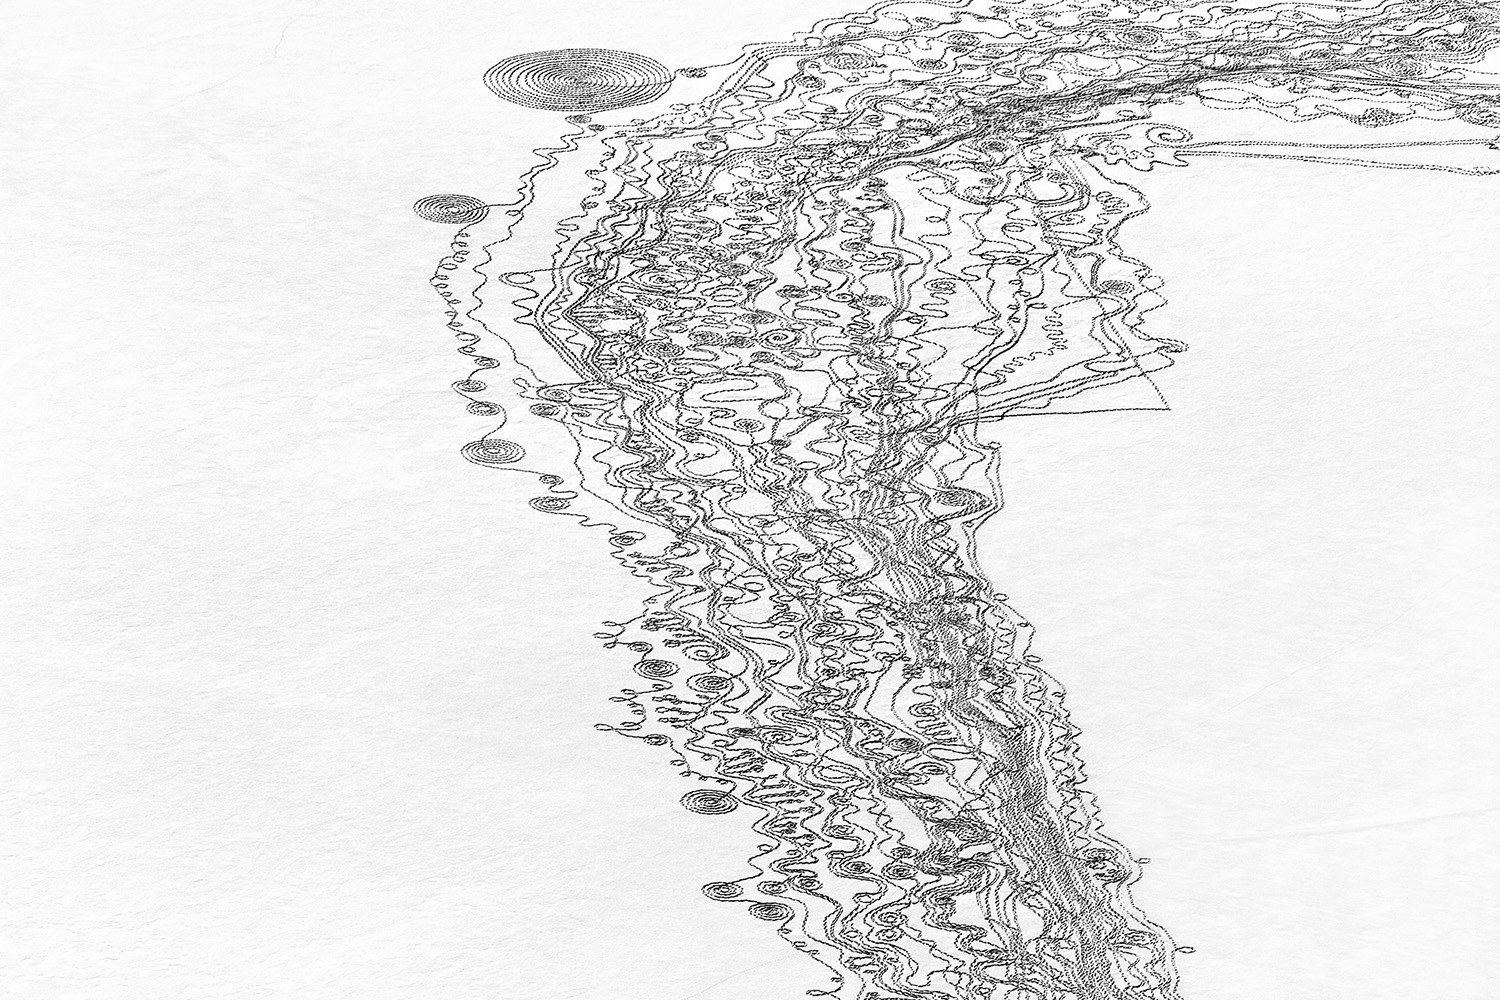 2014 snow drawing on Lake Catamount